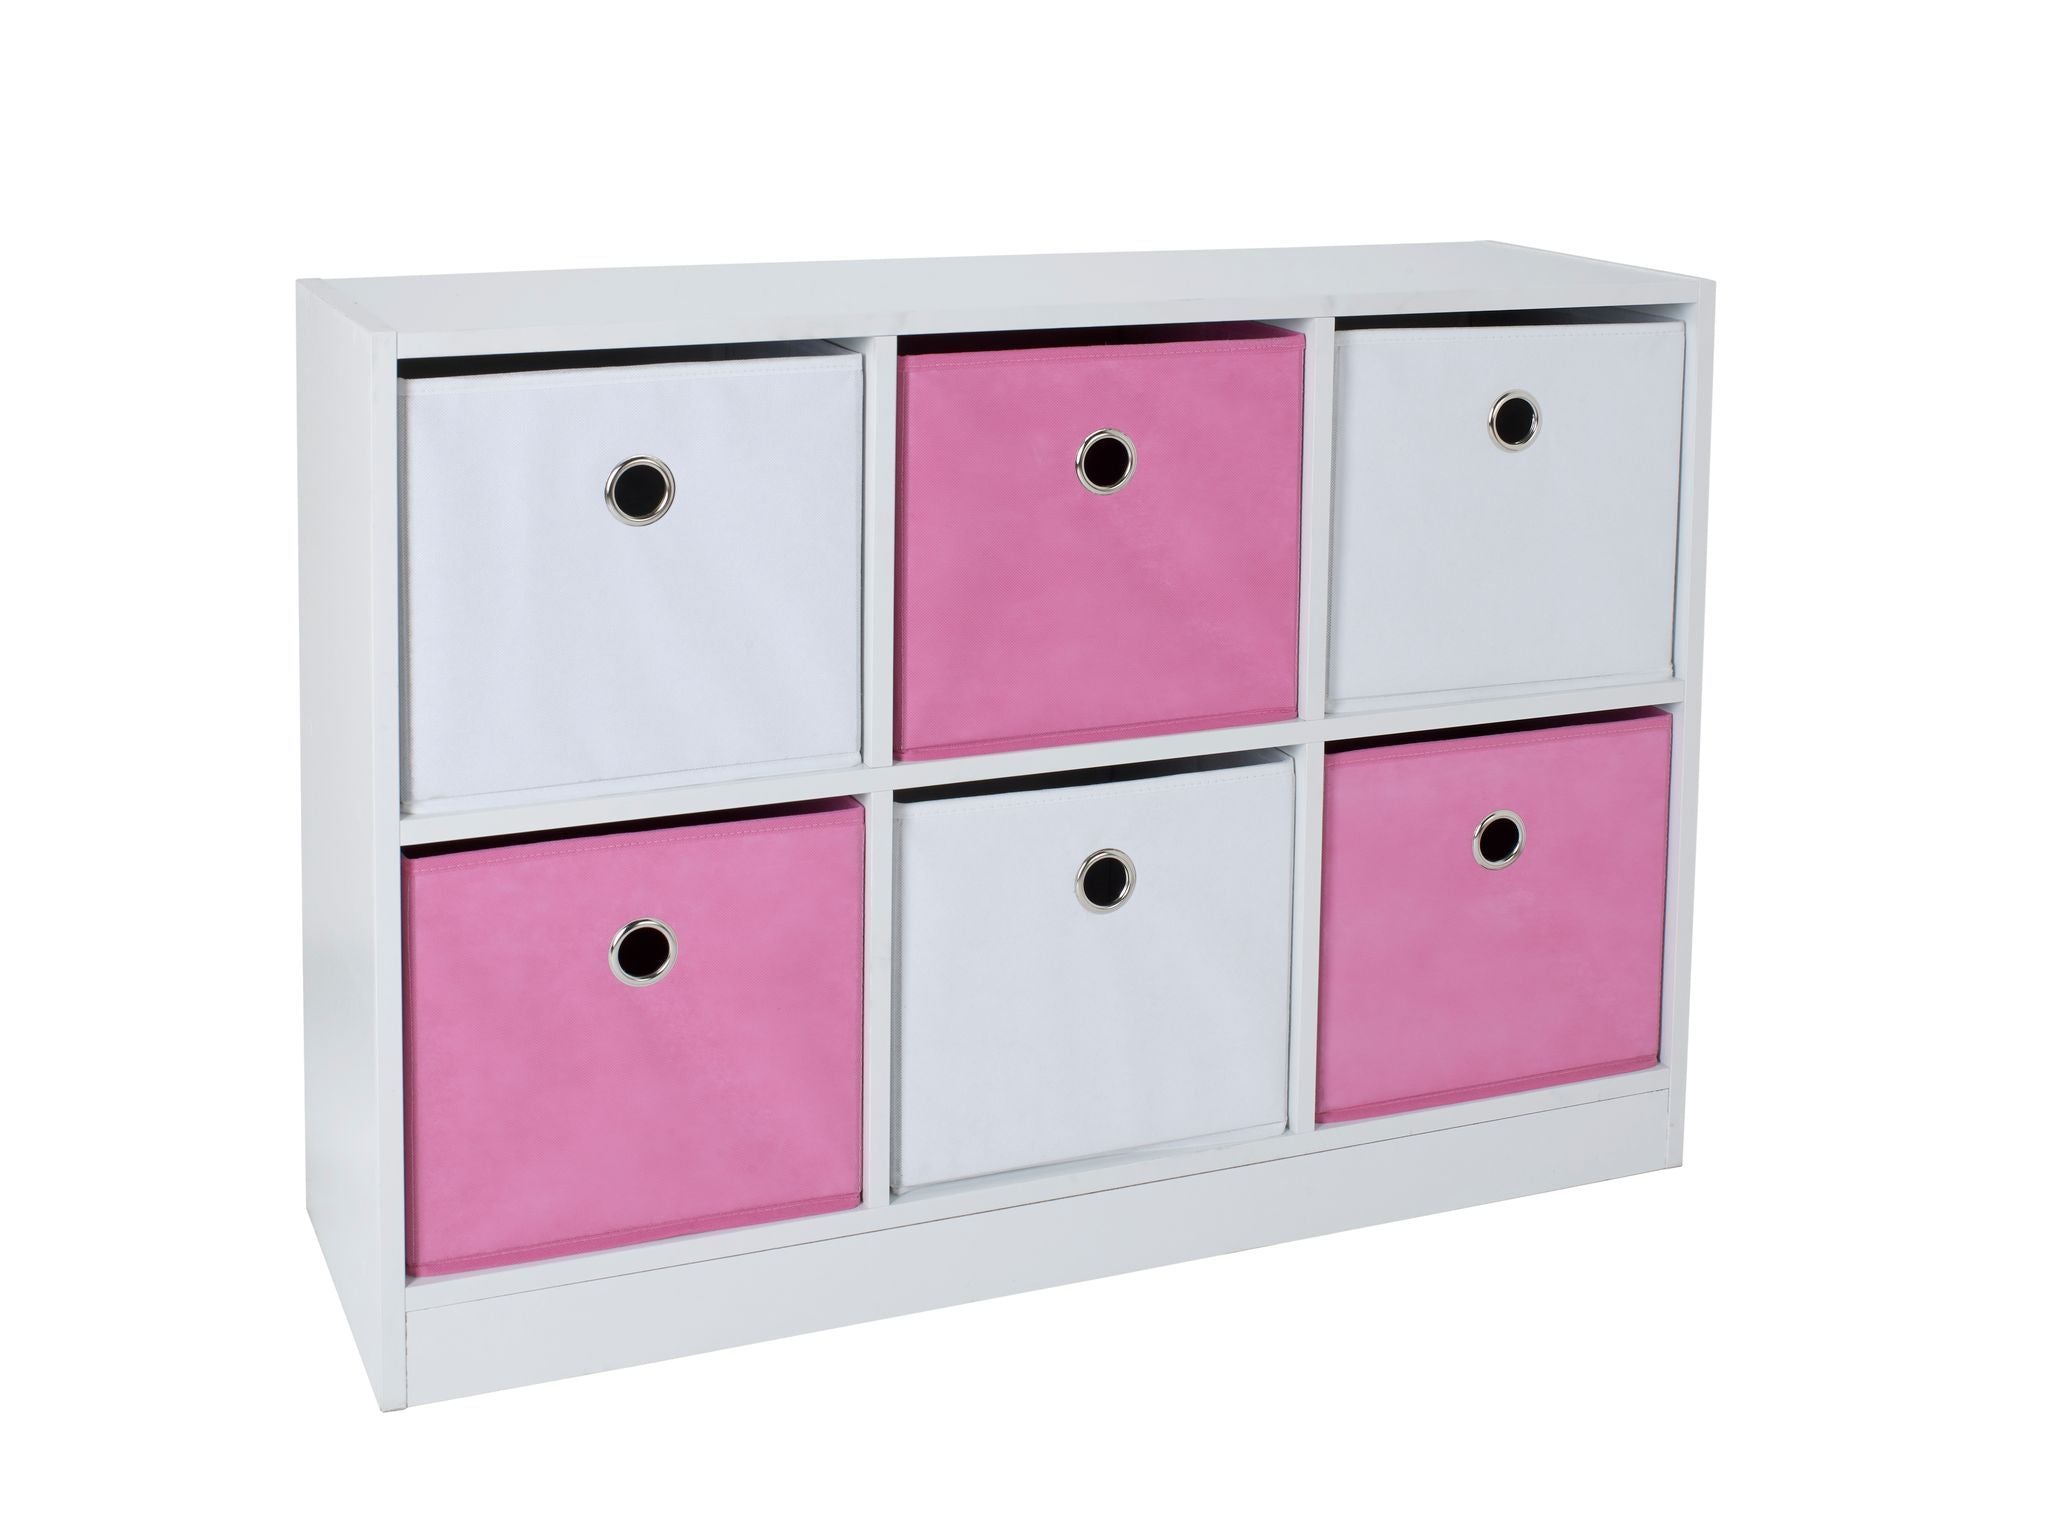 Jive 6 Cube Storage Drawers - Pink/White